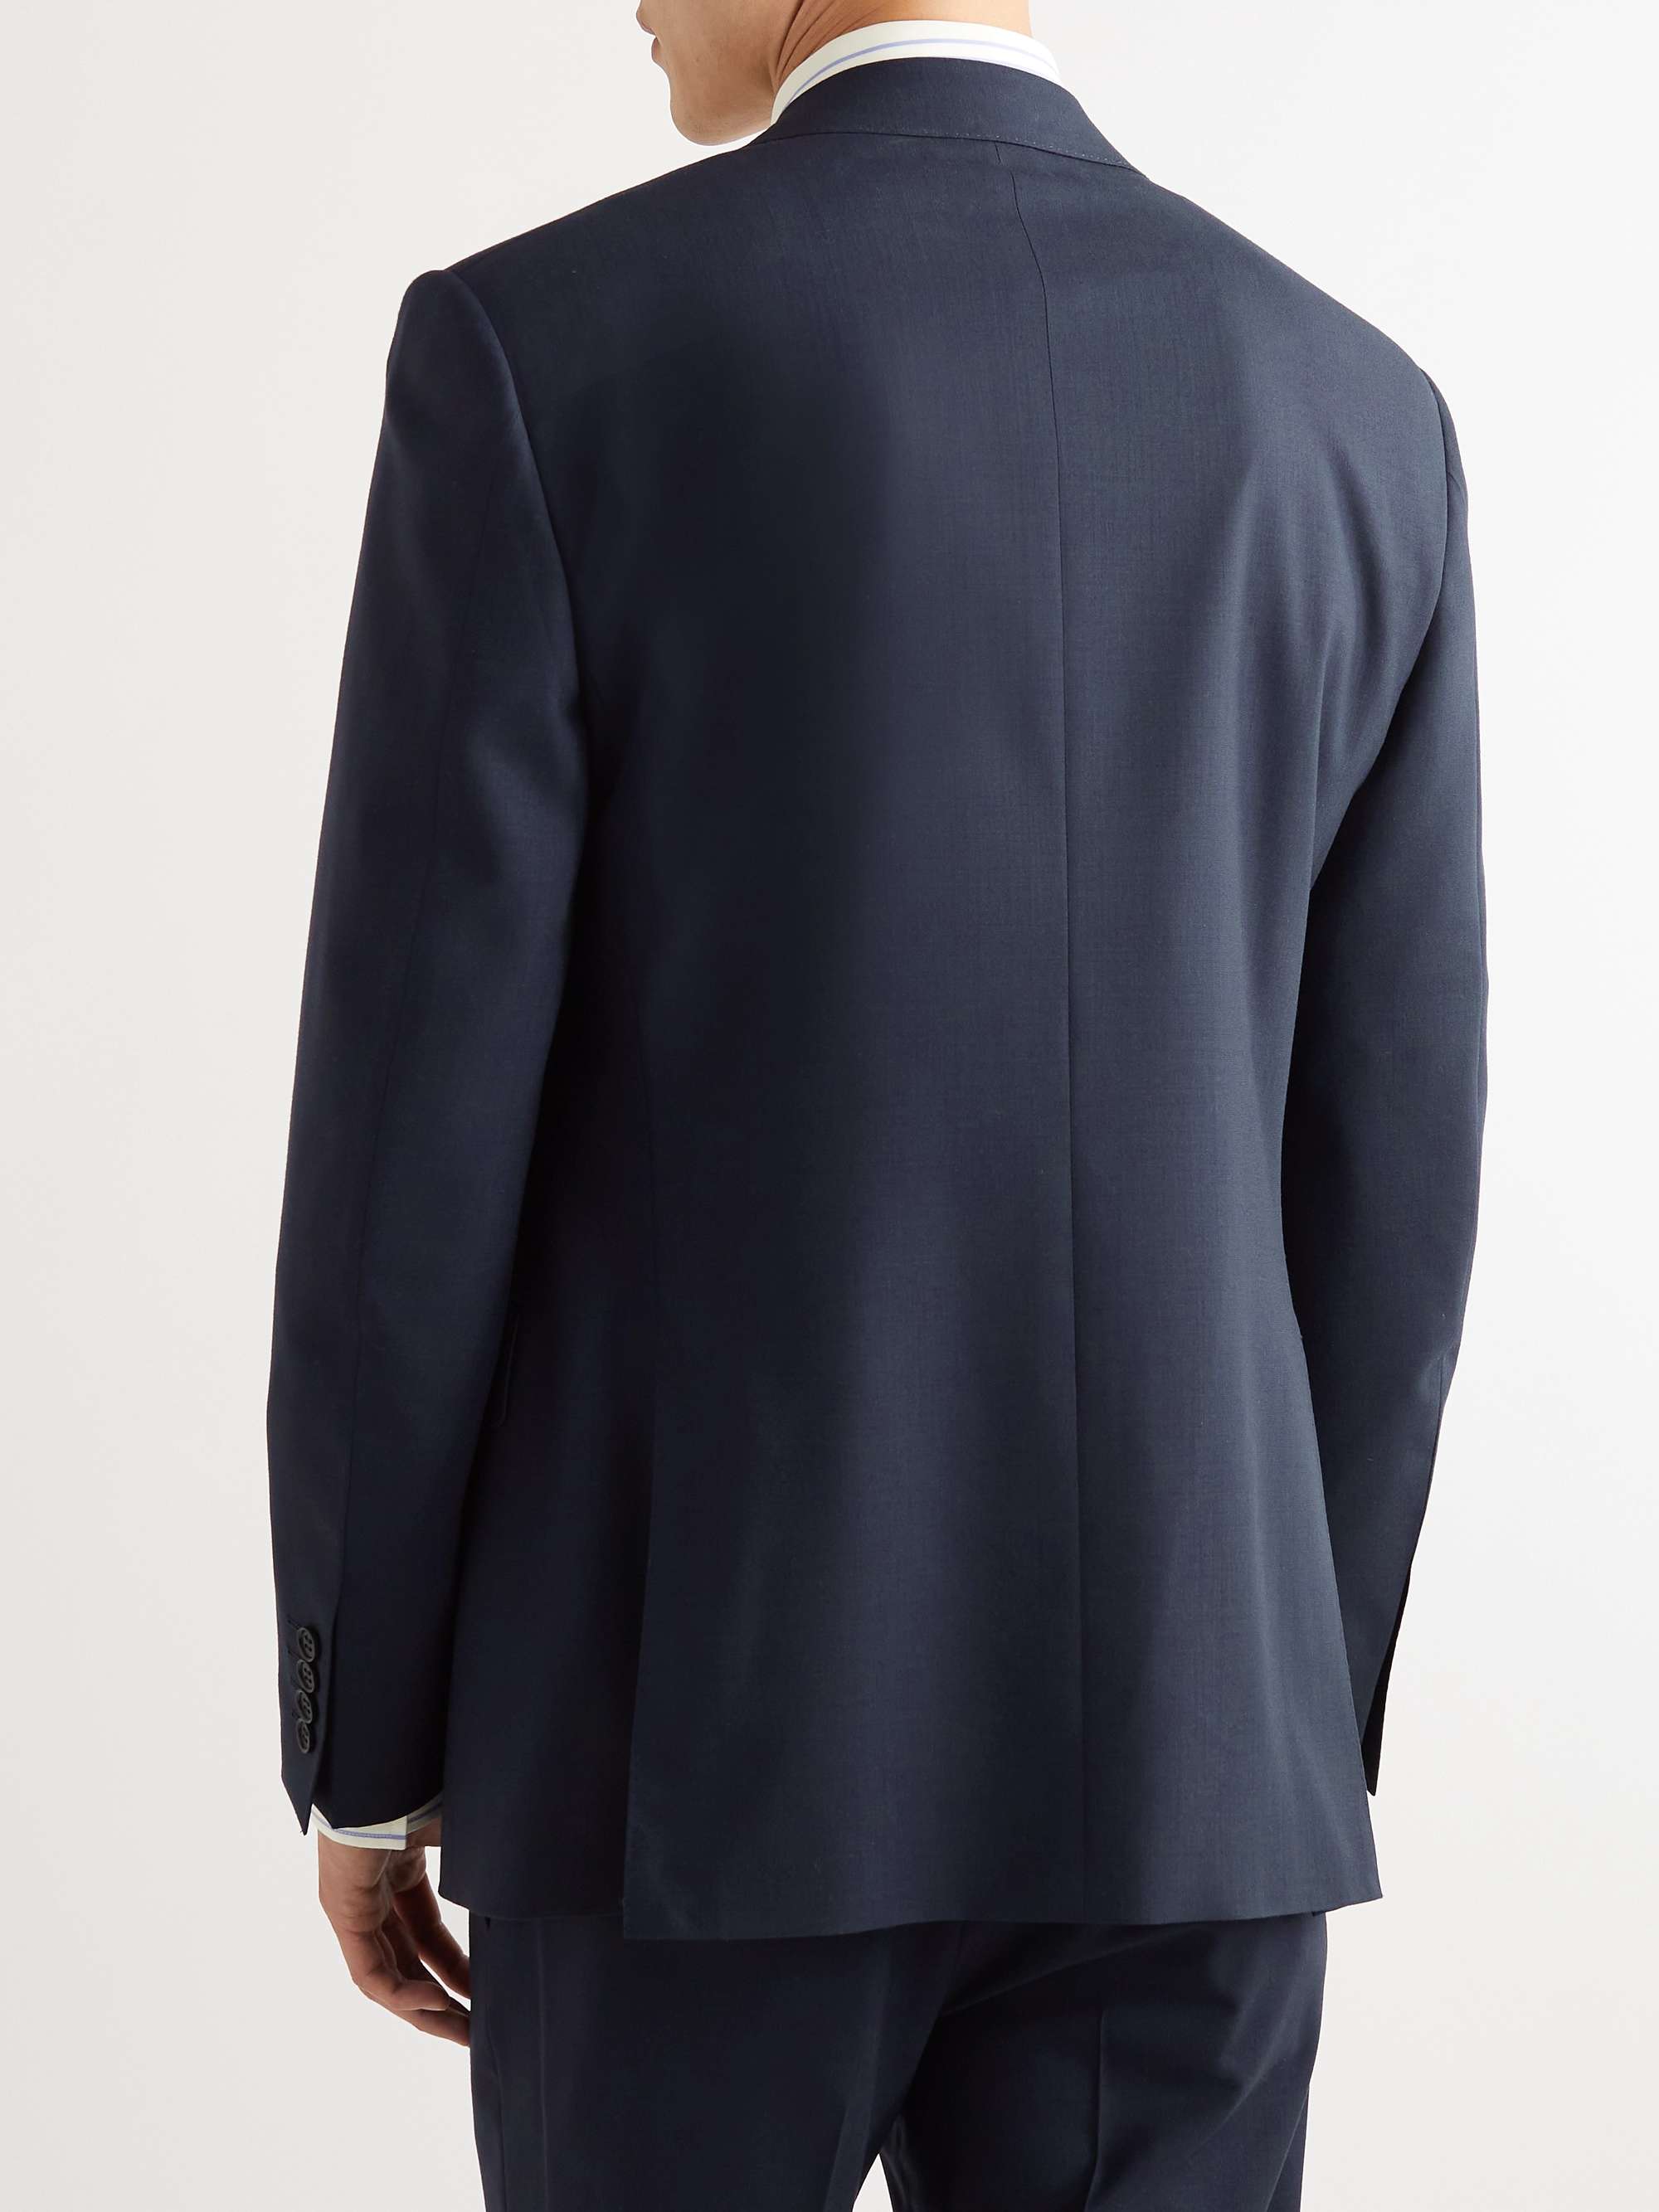 CANALI Impeccable Slim-Fit Super 130s Wool Suit Jacket